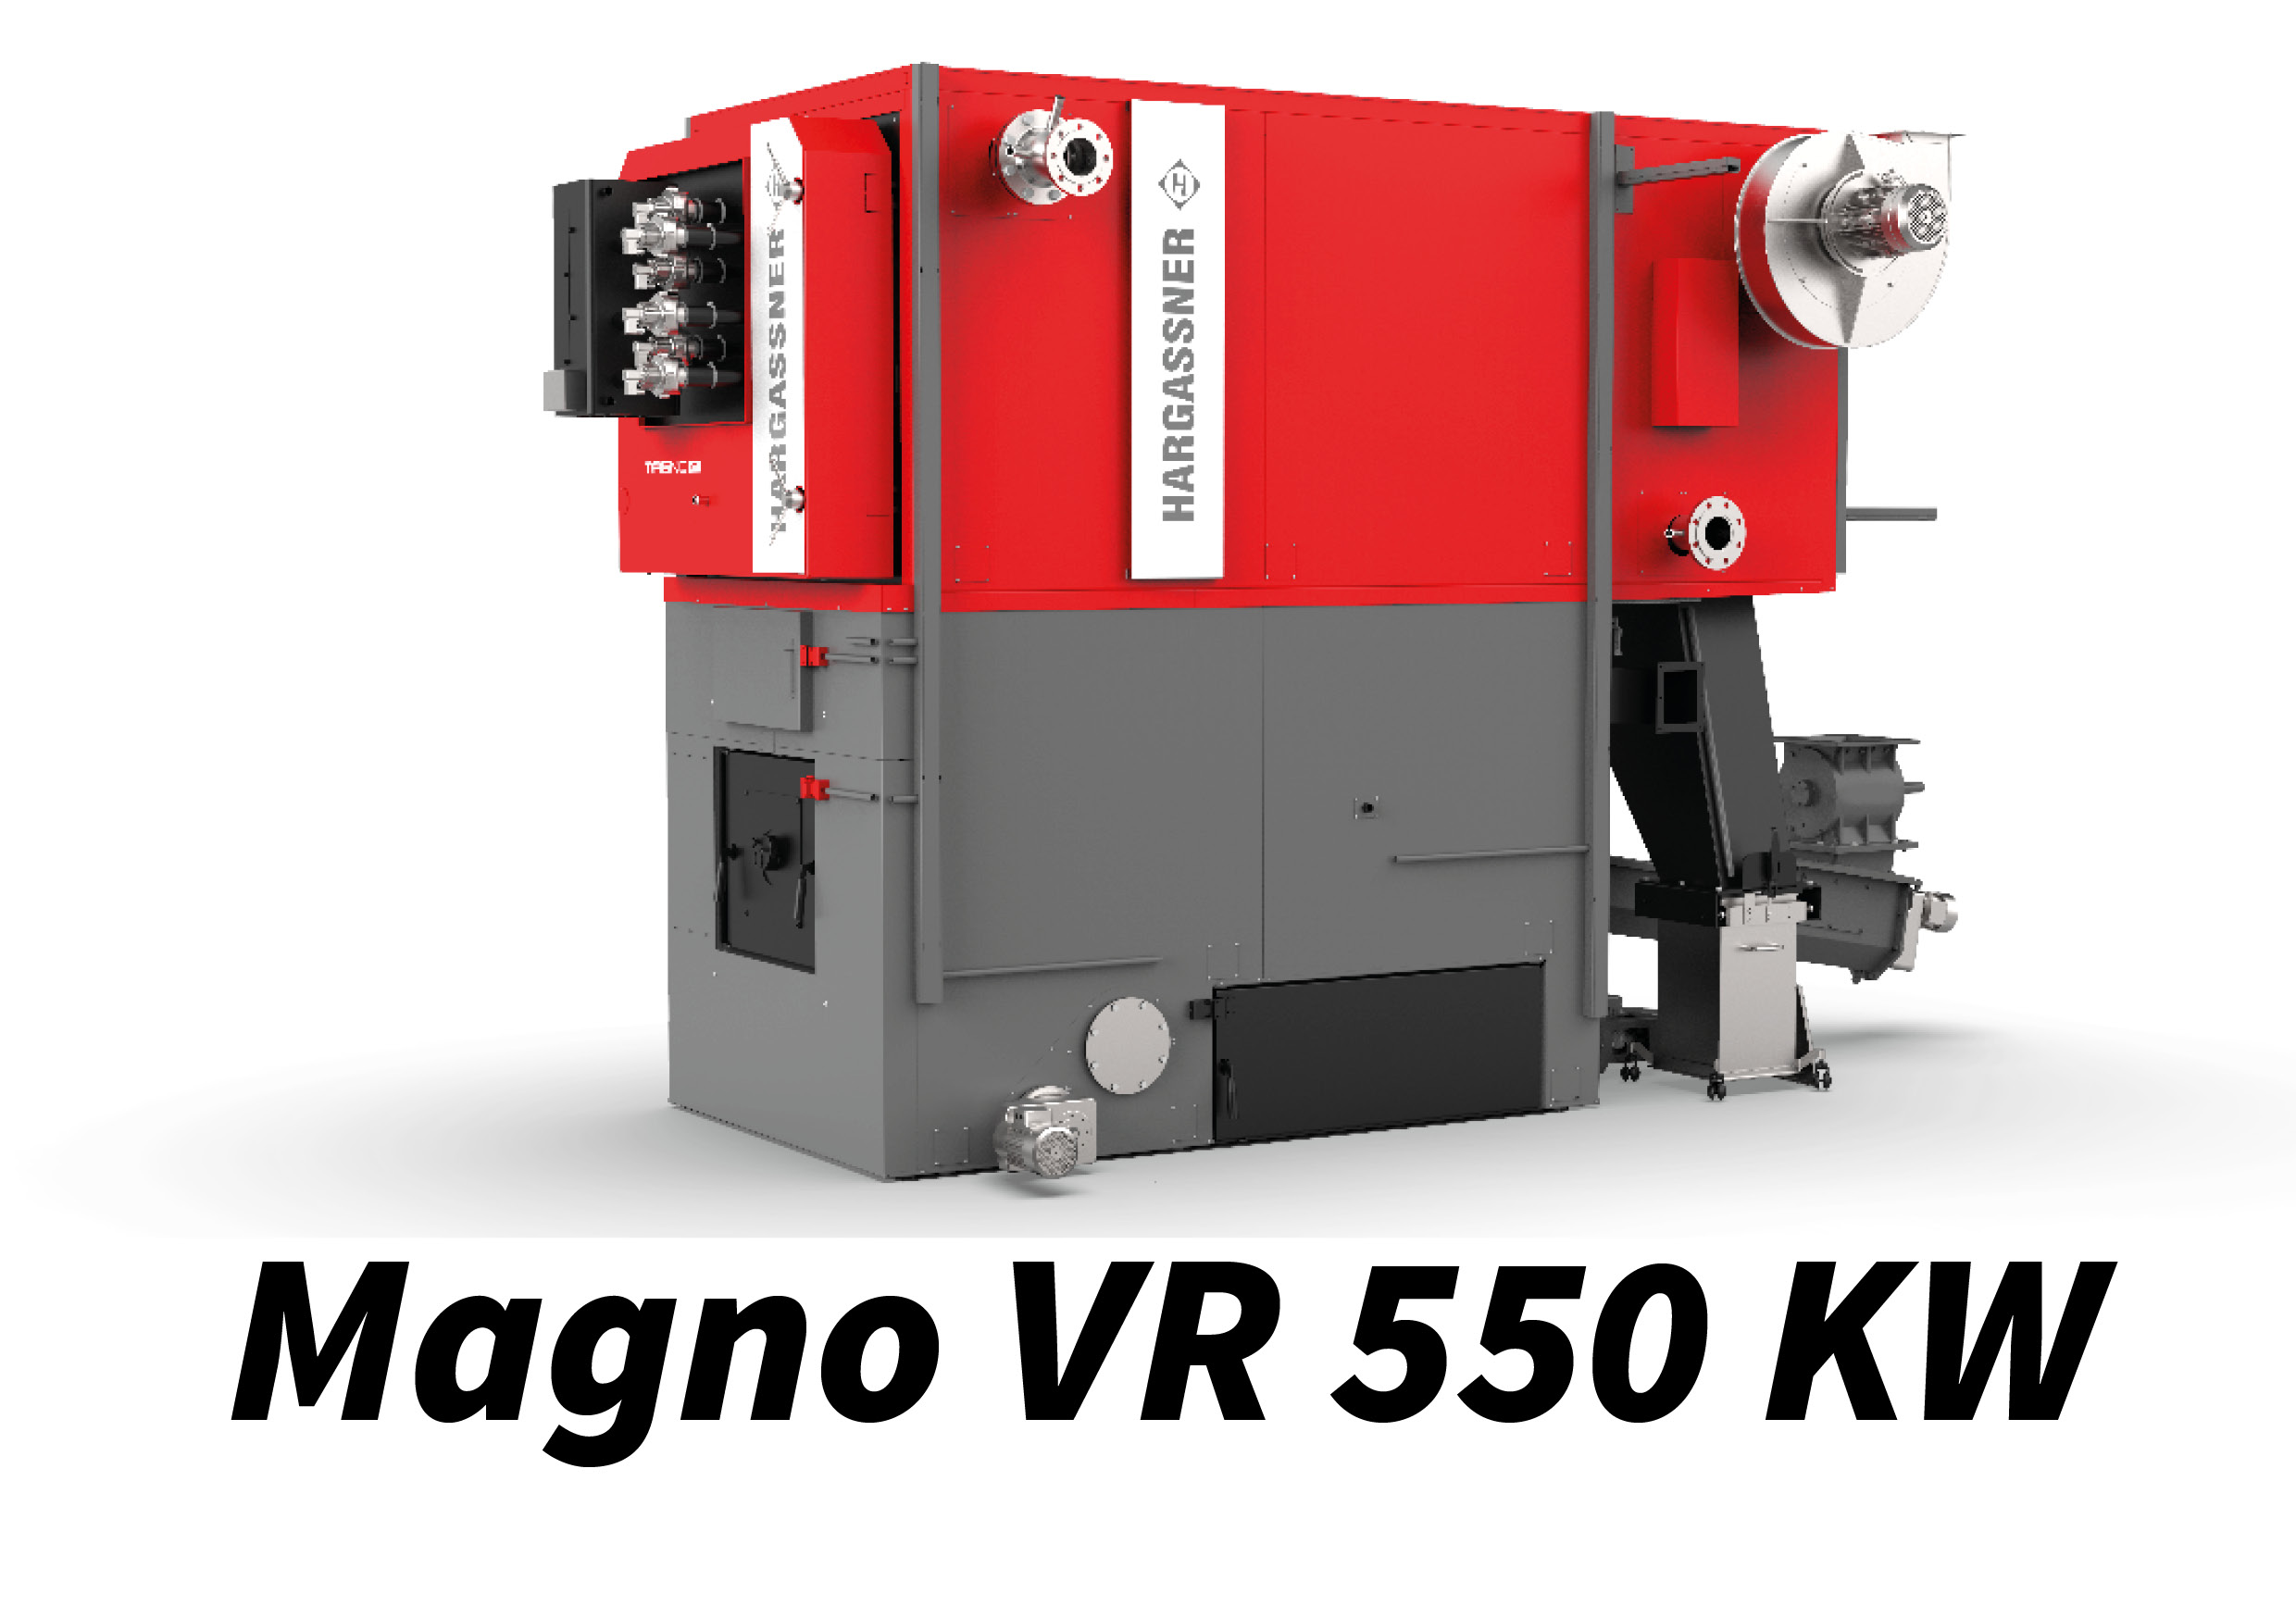 Magno VR 550 kW